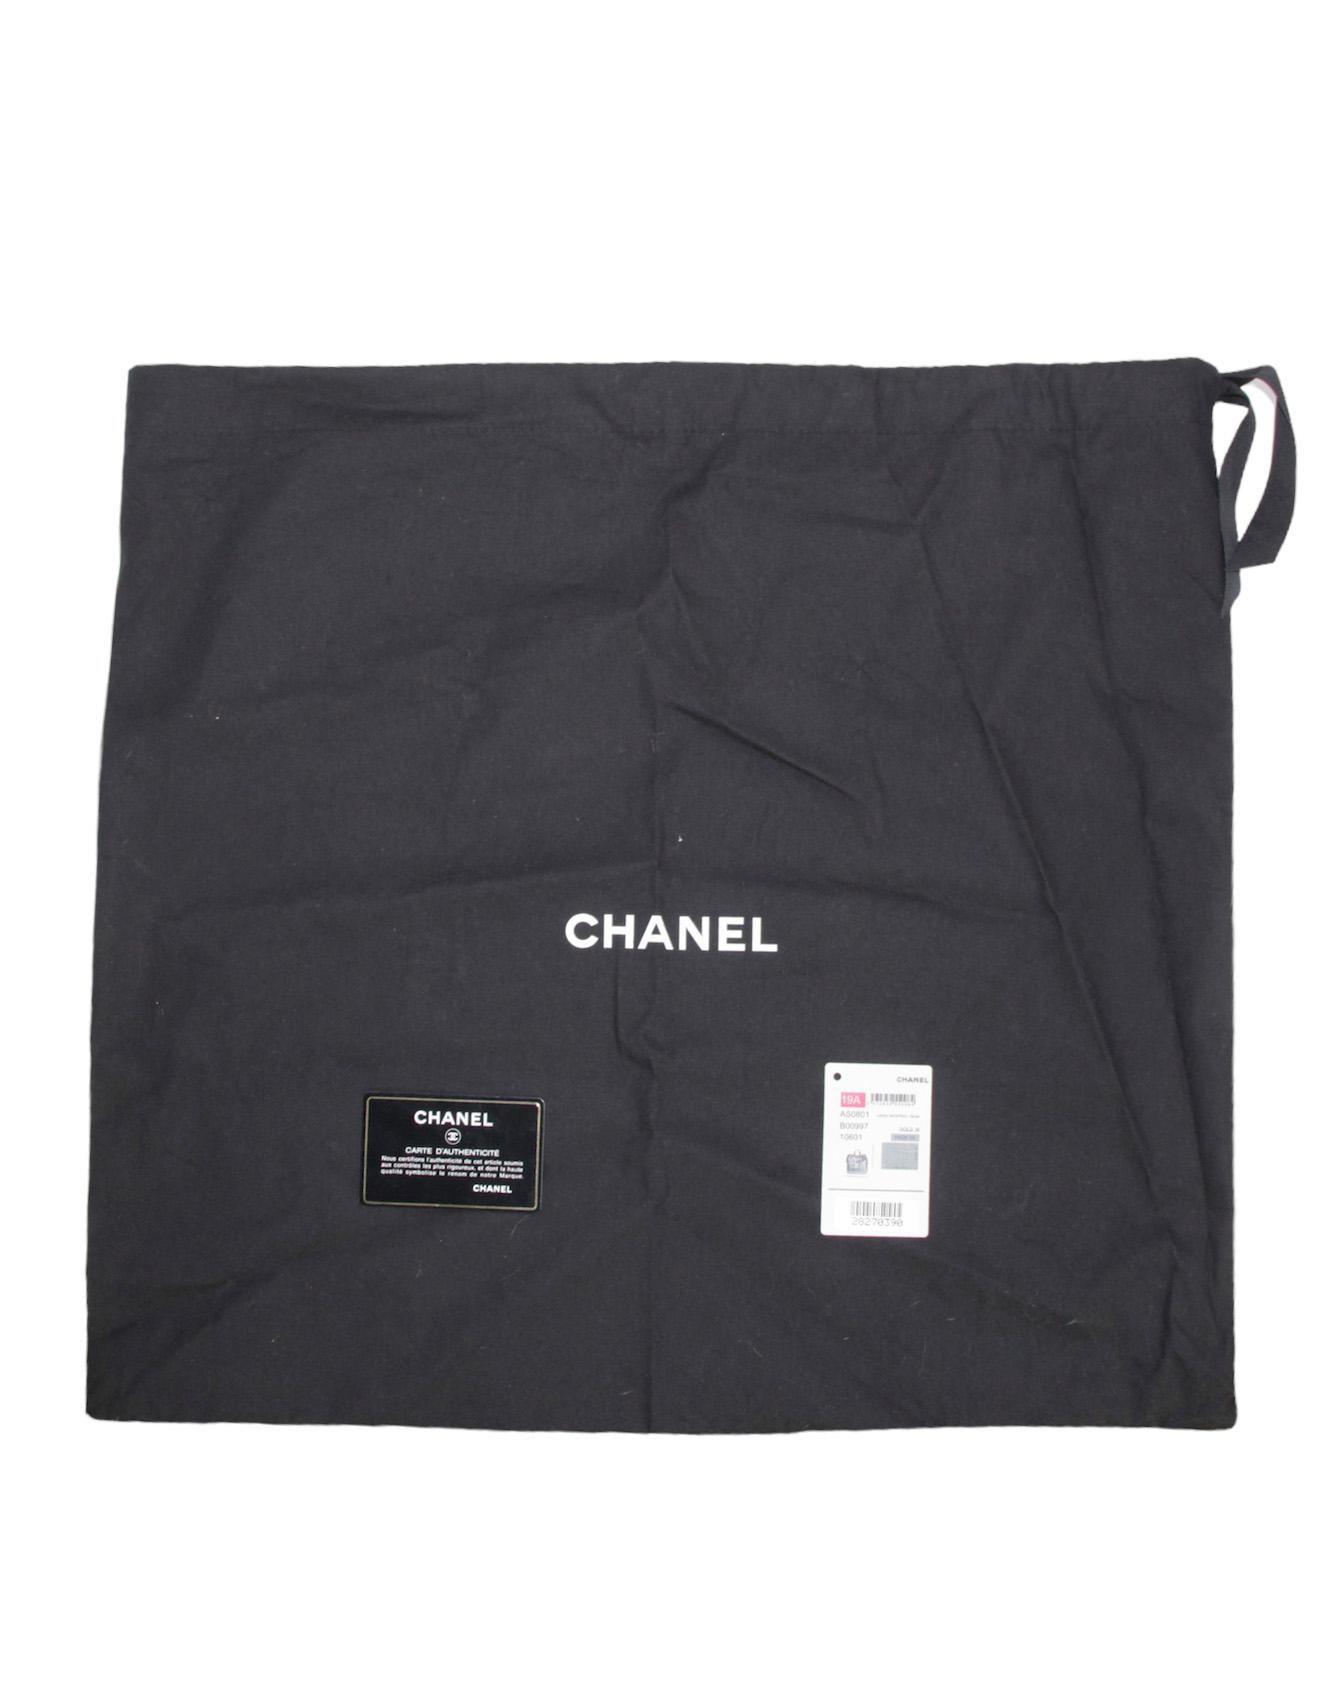 Chanel Paris-New York grand sac fourre-tout Coco en crocodile embossé blanc 5